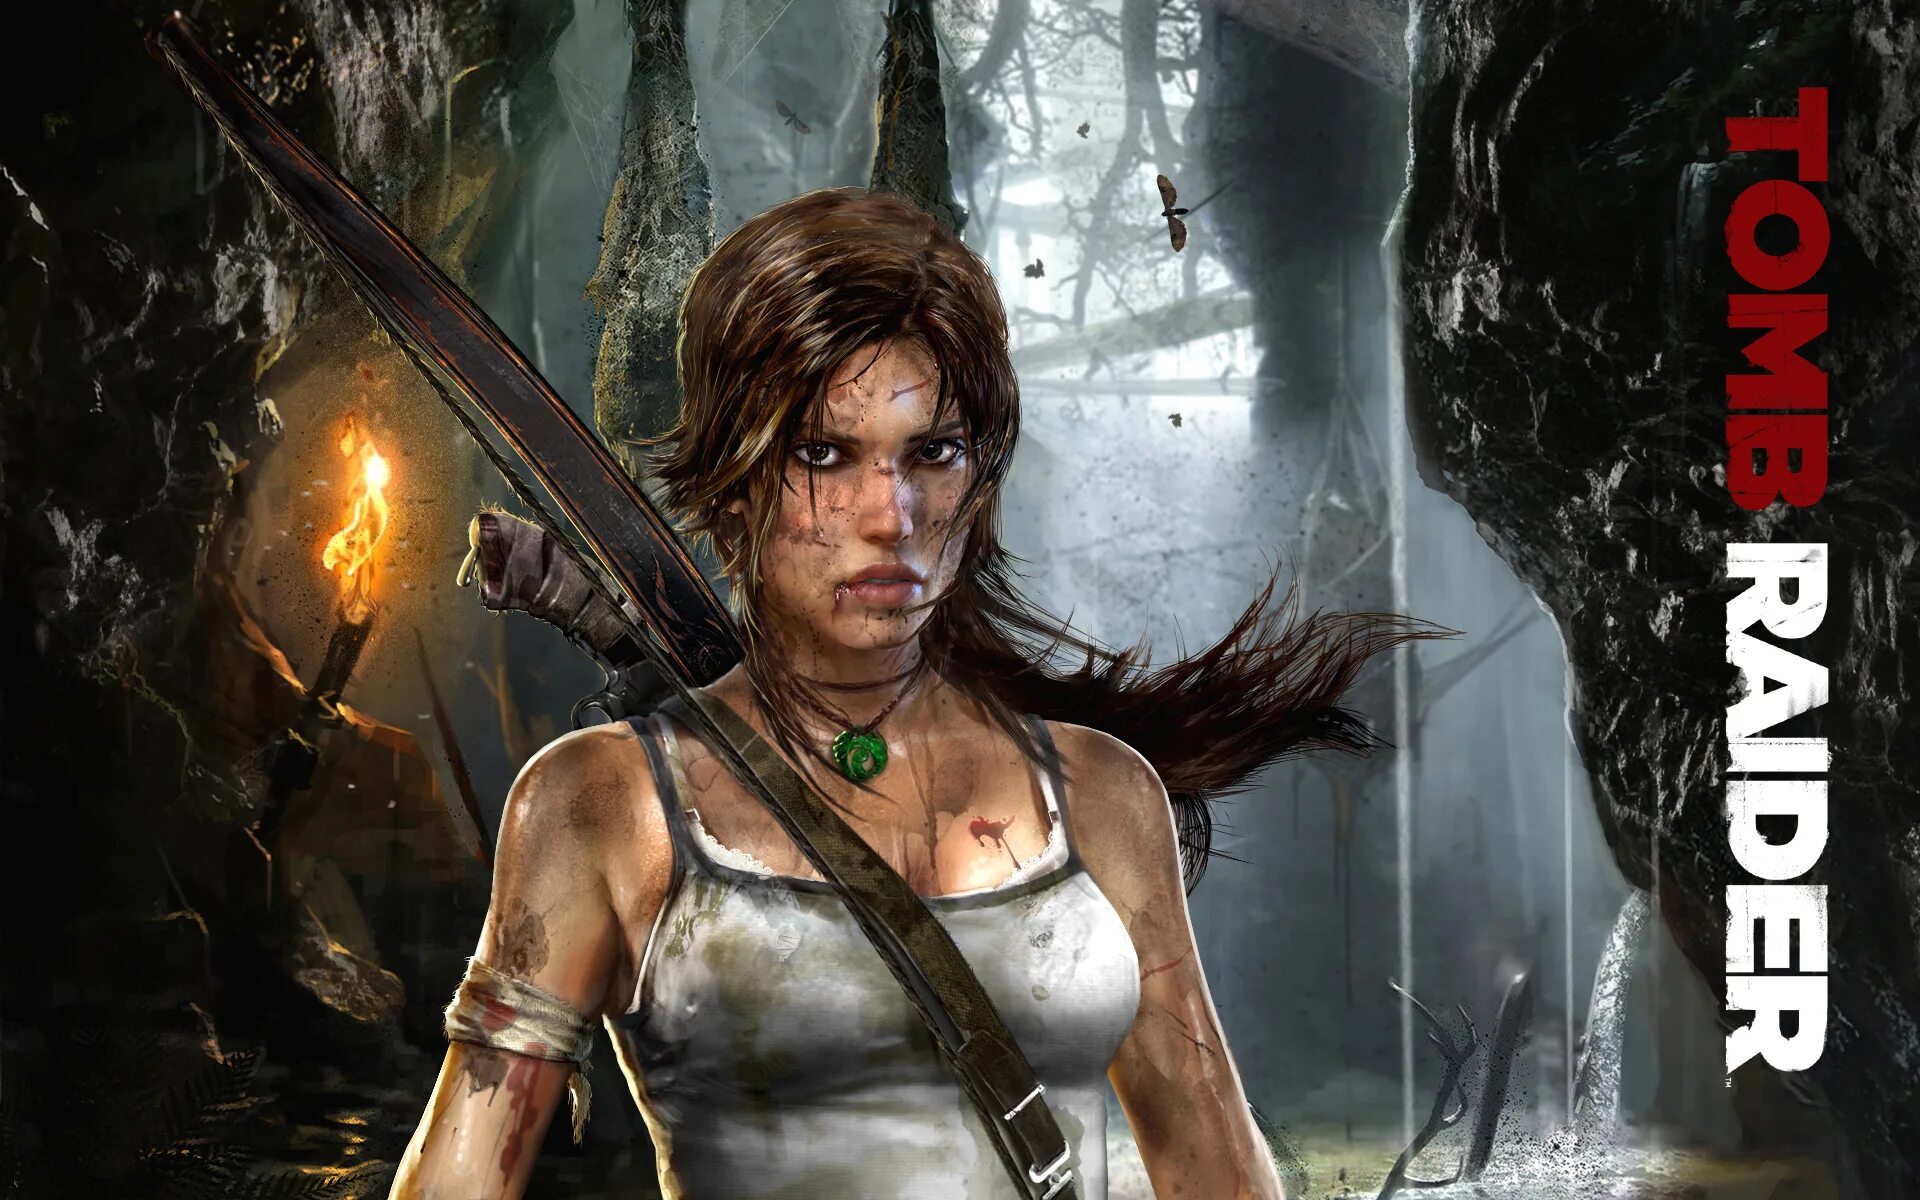 Томб Райдер 2012. Lara Croft Tomb Raider игра 2013.